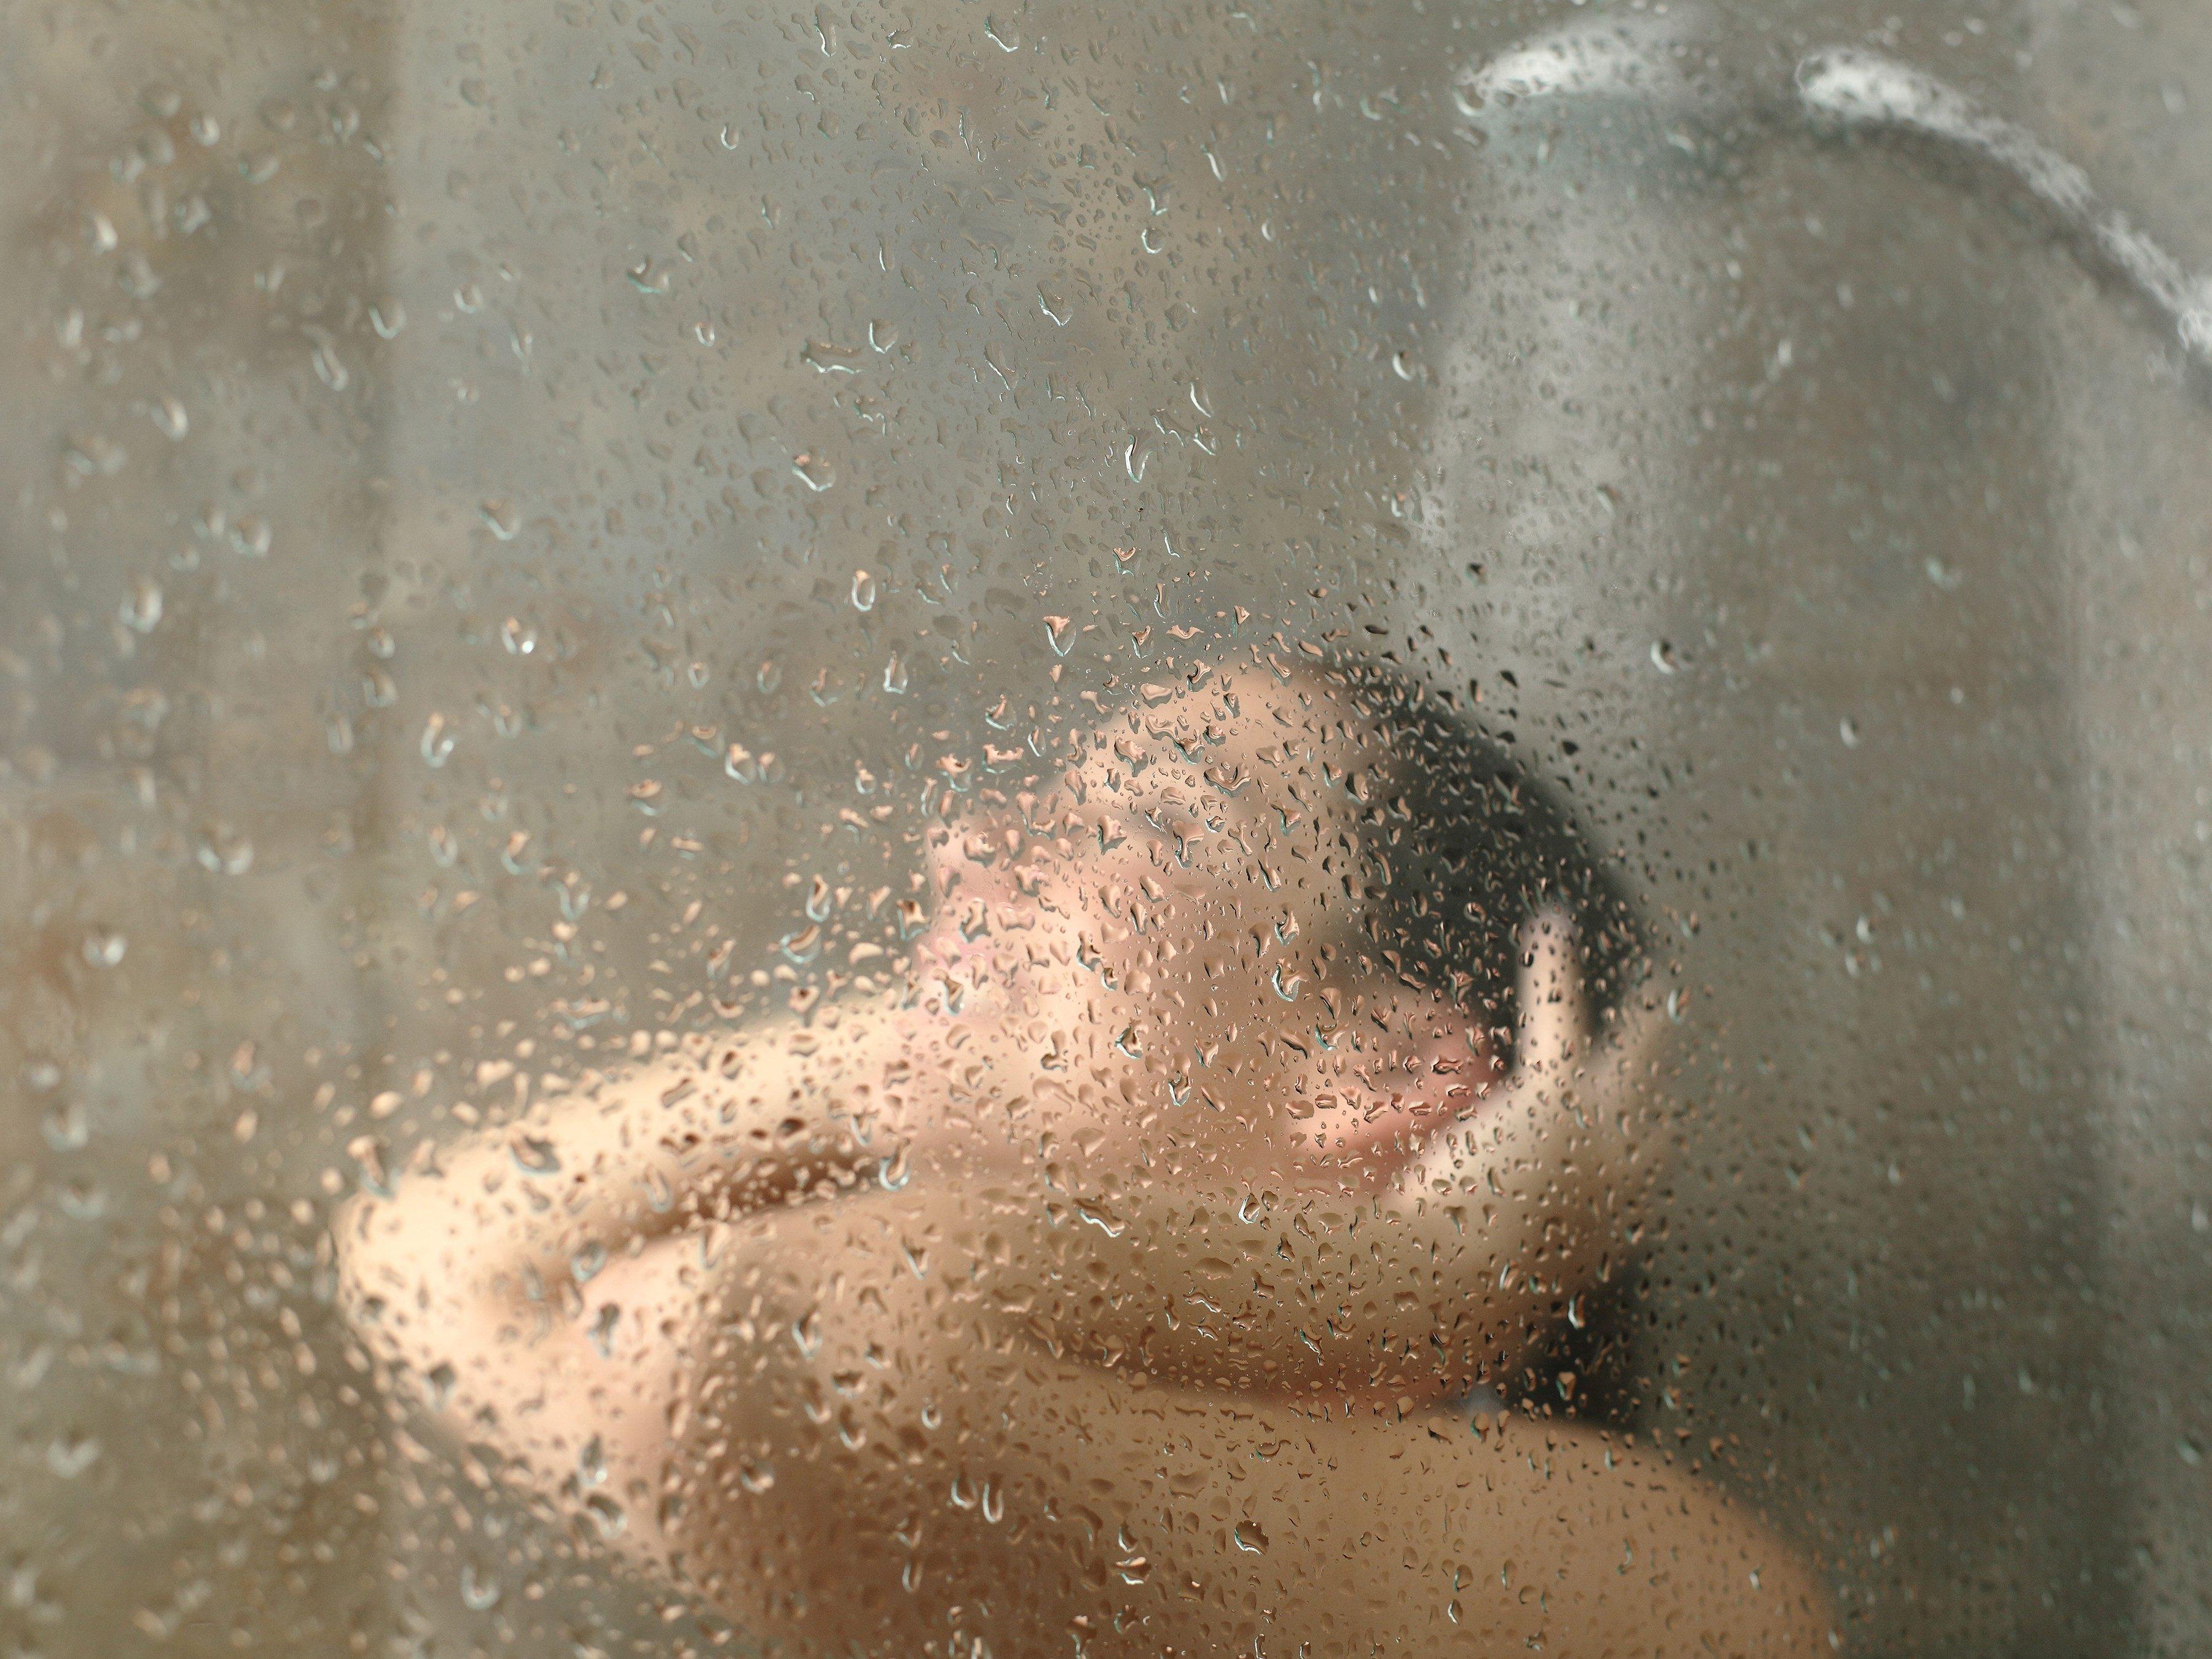 3. Avoid hot baths or showers